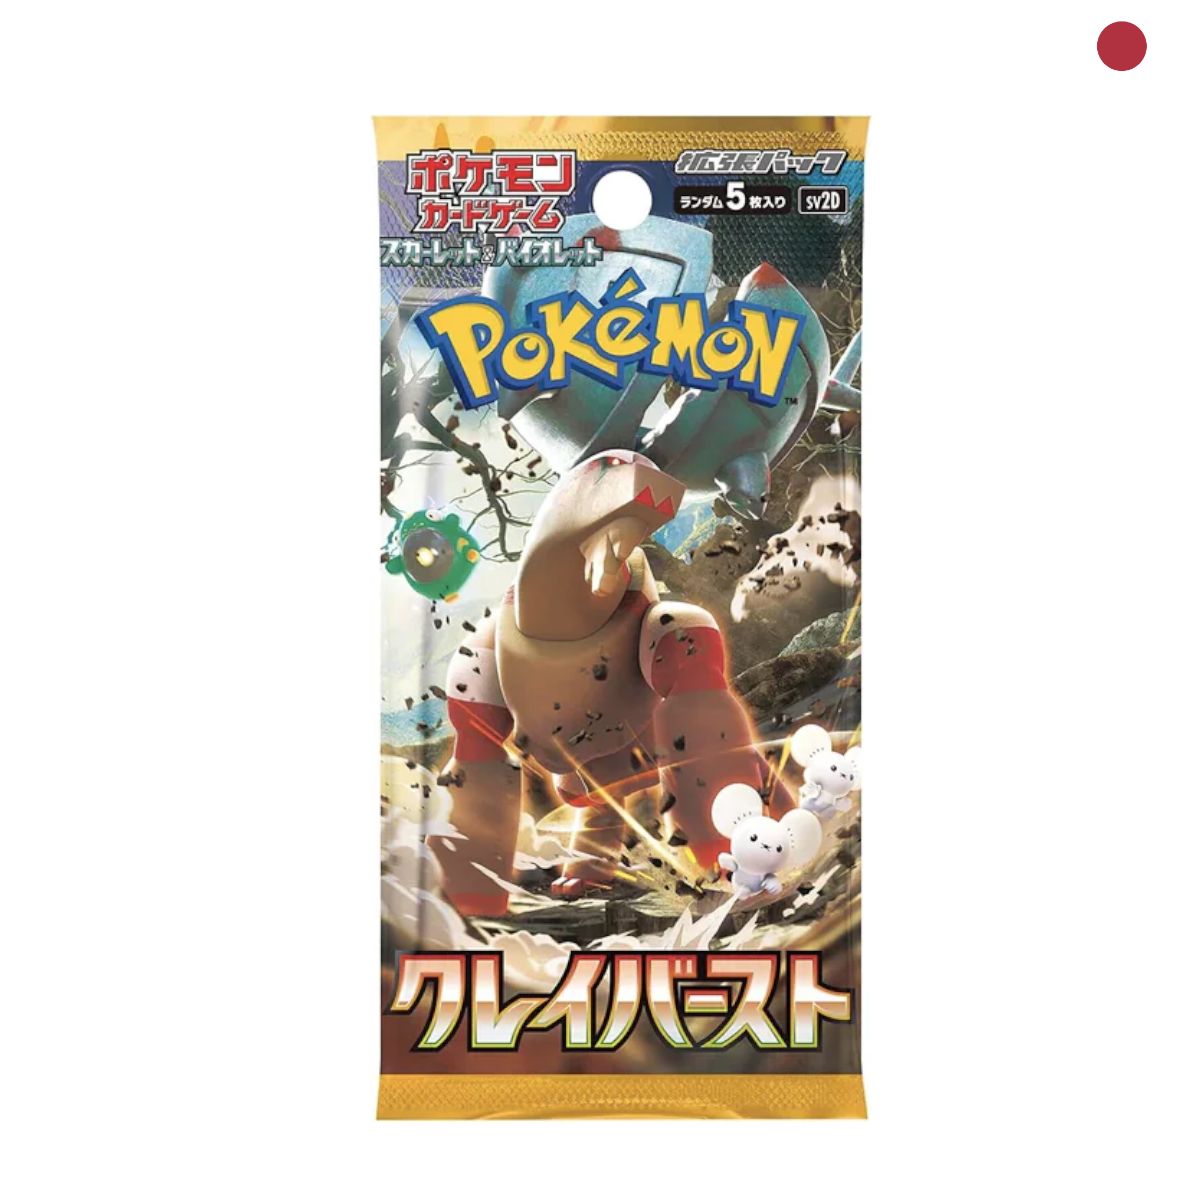 Pokémon - Clay Burst sv2d Booster japanisch